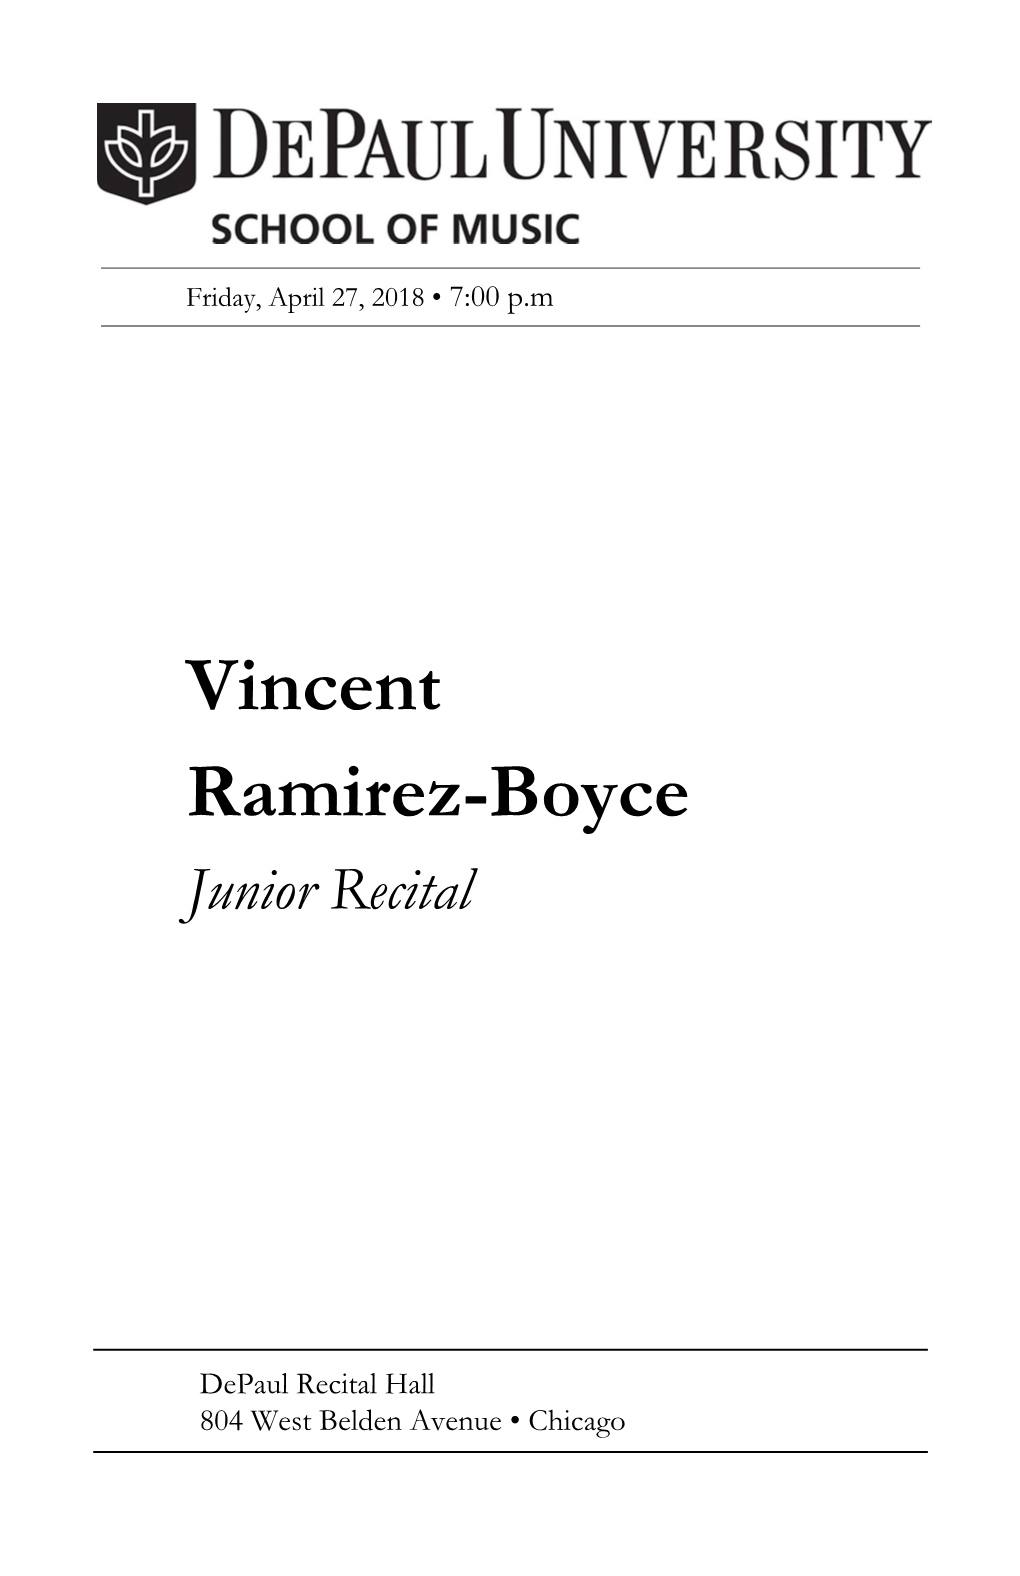 Vincent Ramirez-Boyce